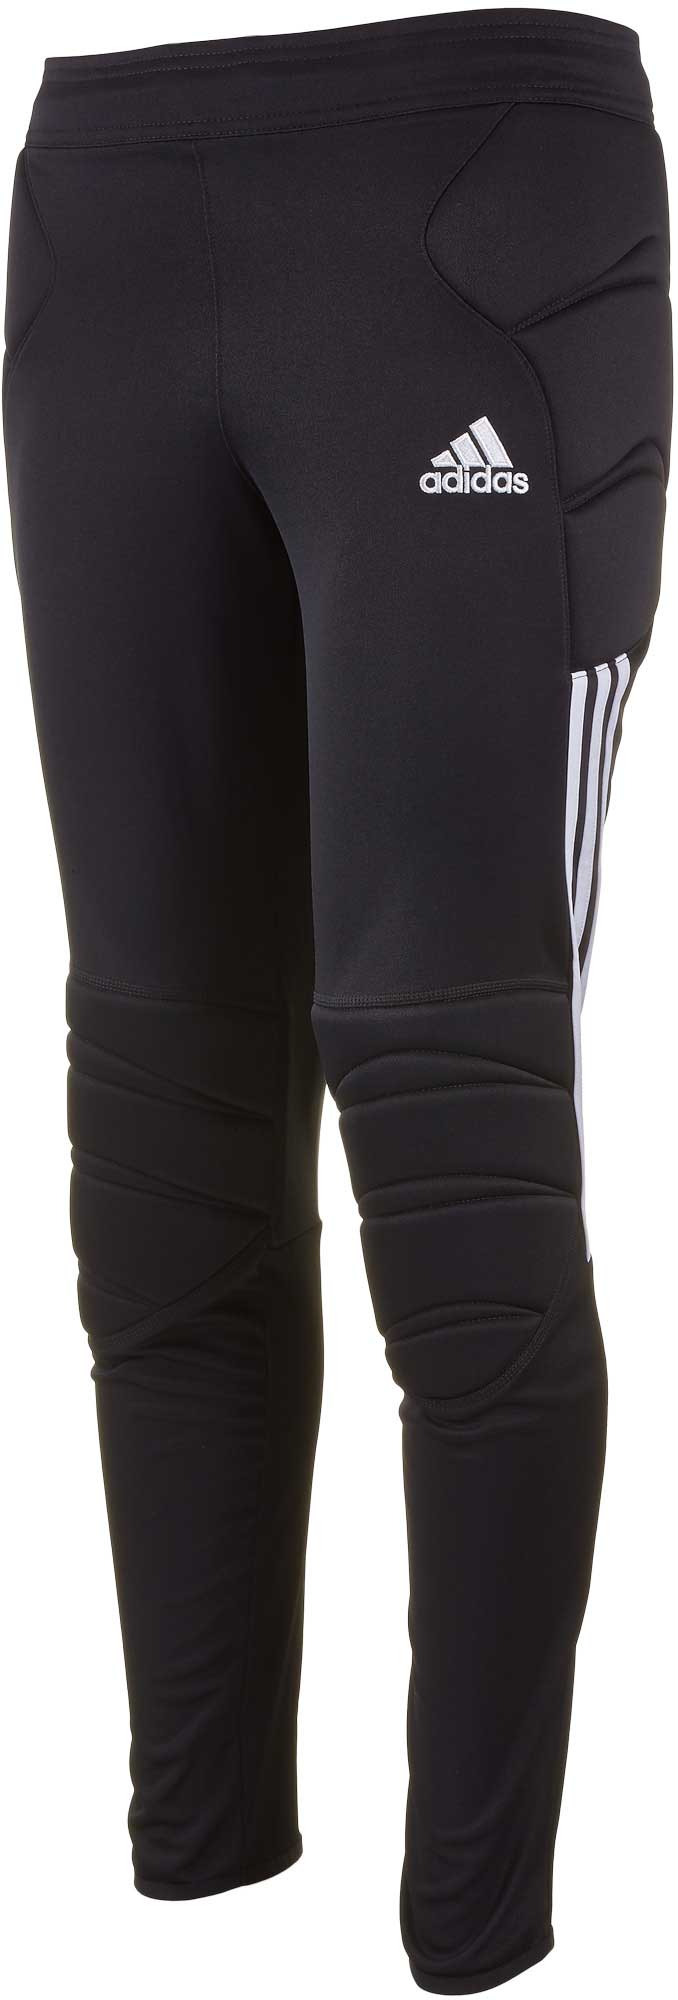 adidas Goalkeeper Pants - Black Keeper Pant